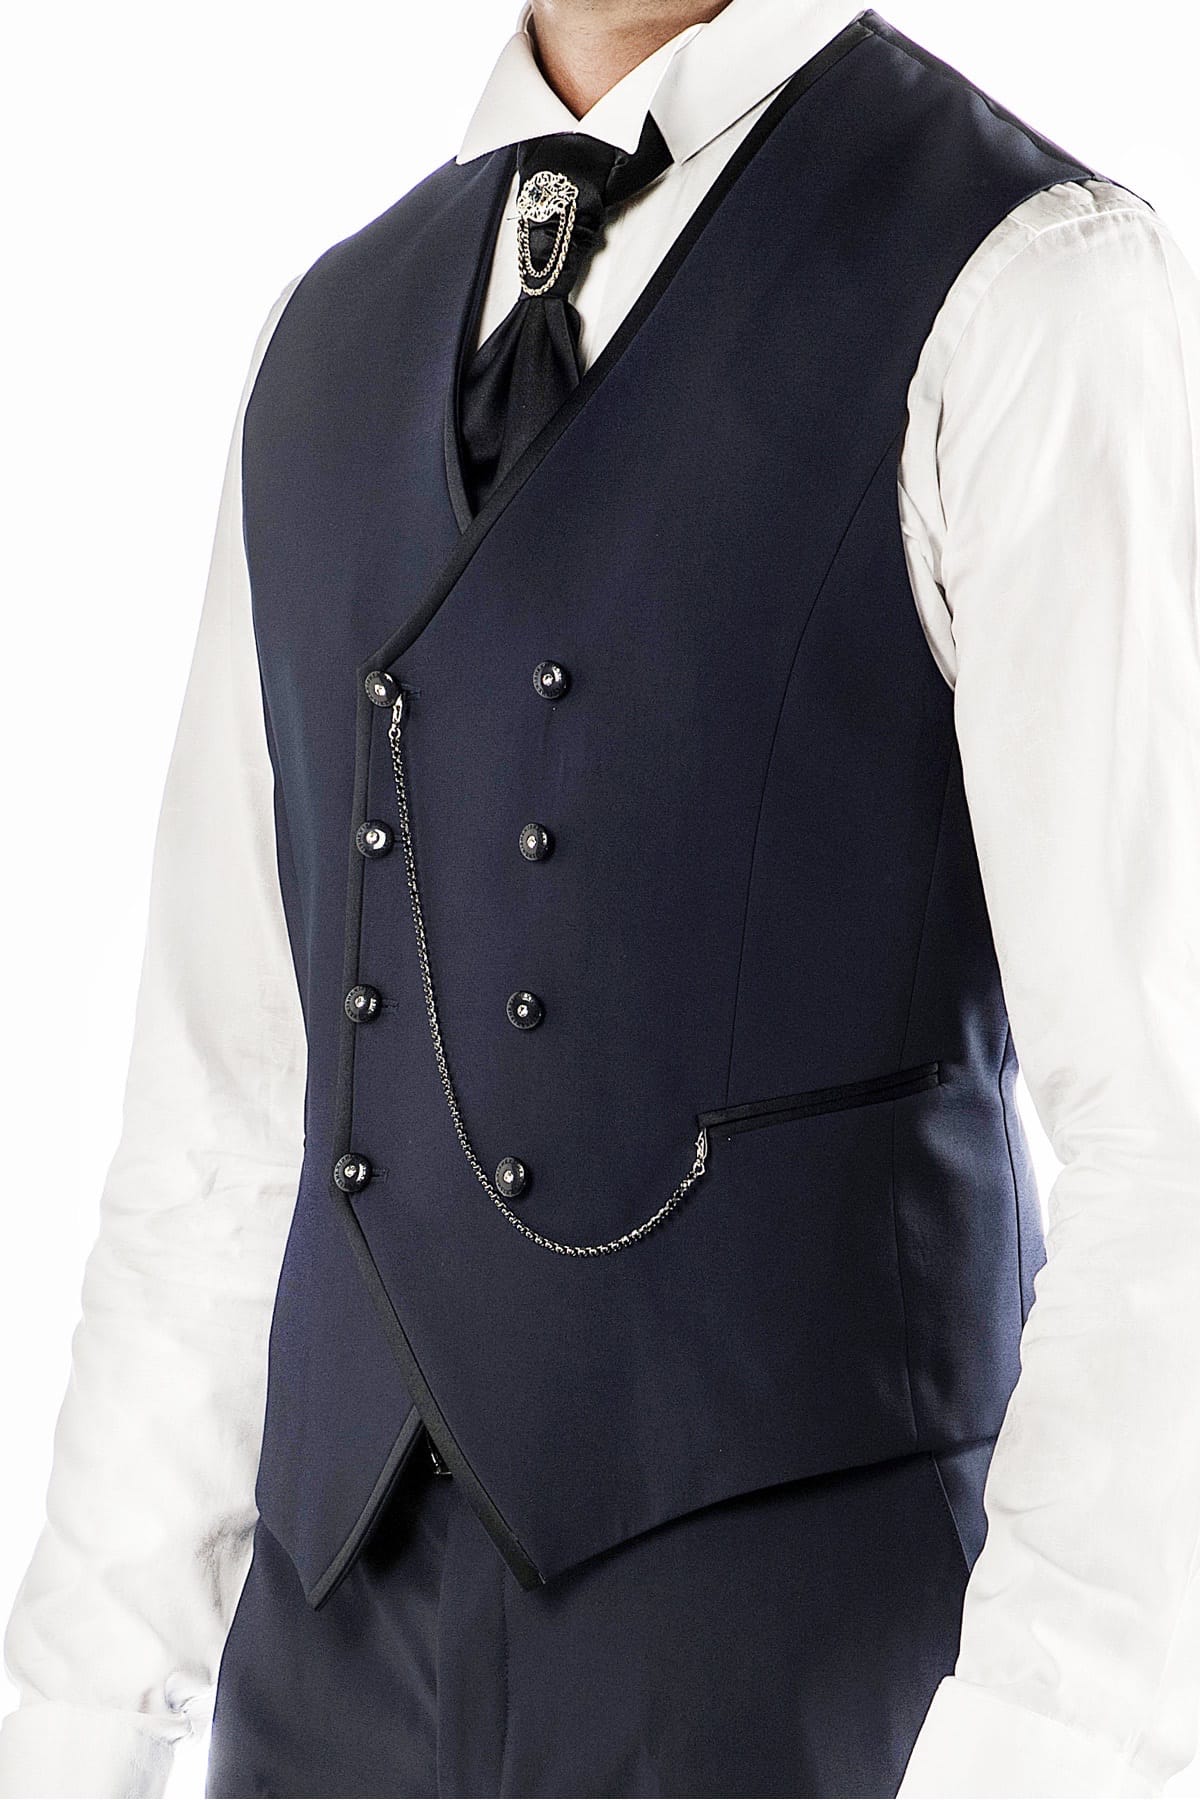 Blue Tuxedo with Damask Mandarin Collar 